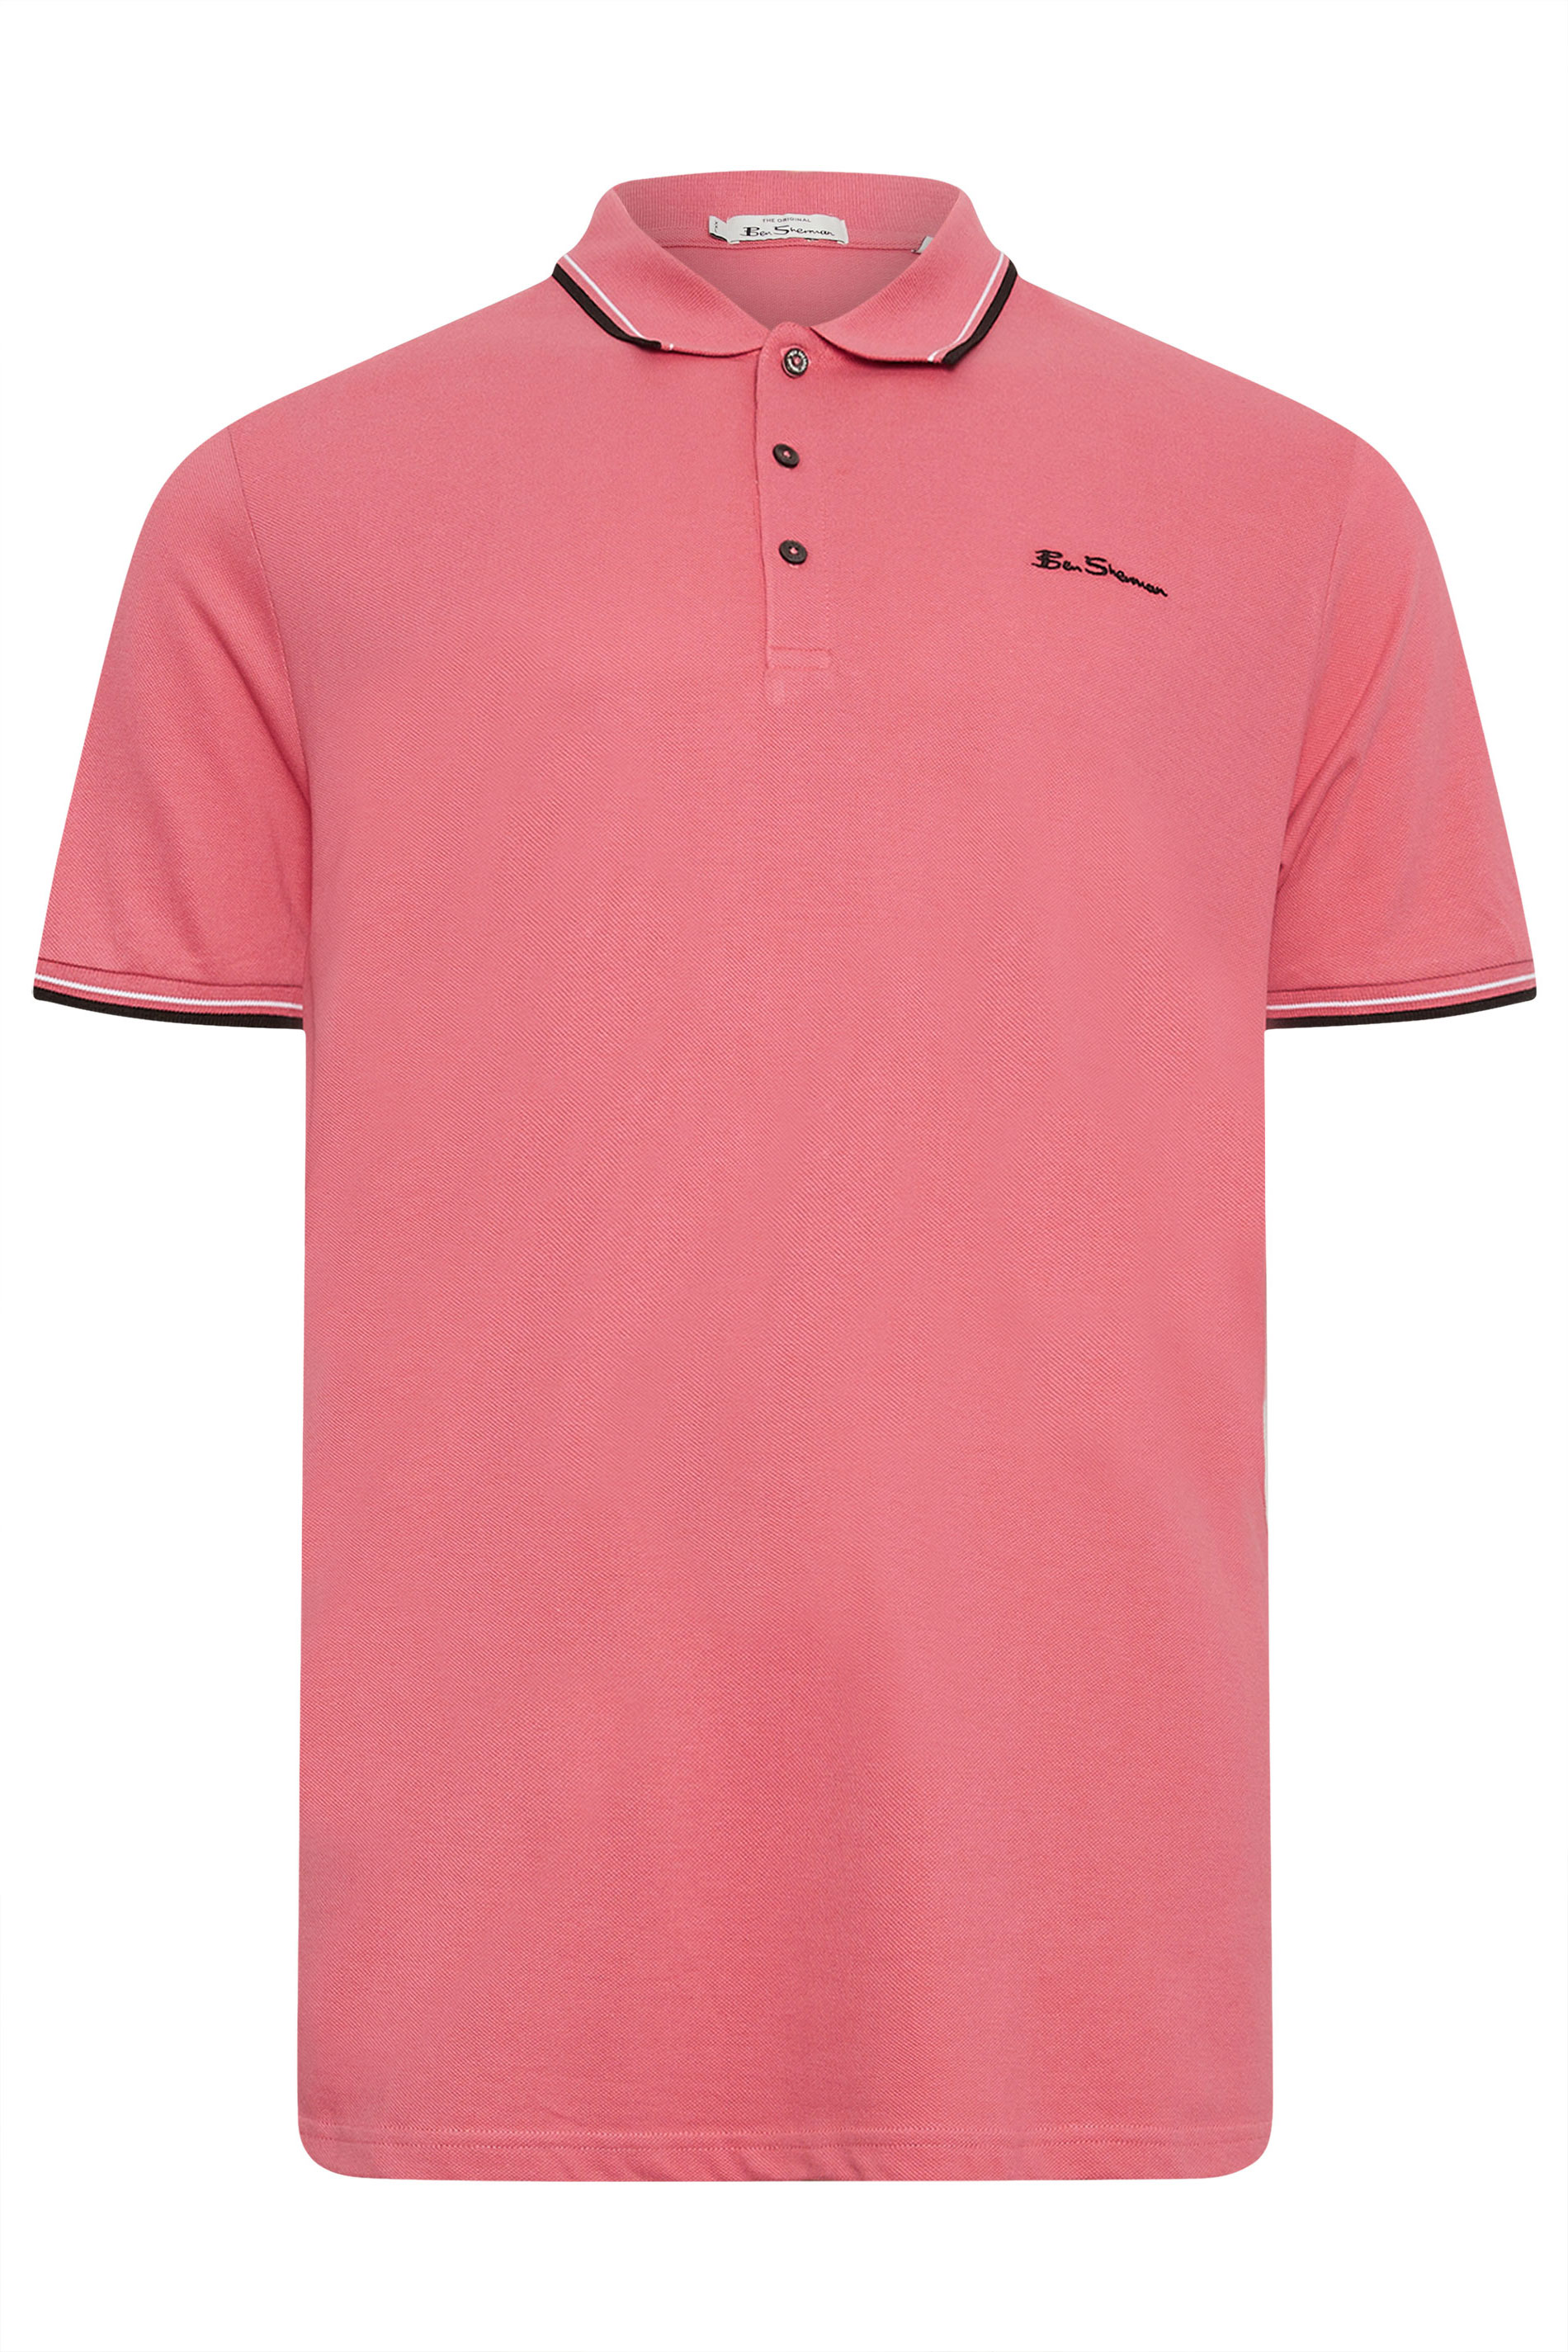 BEN SHERMAN Big & Tall Pink Tipped Polo Shirt | BadRhino 2